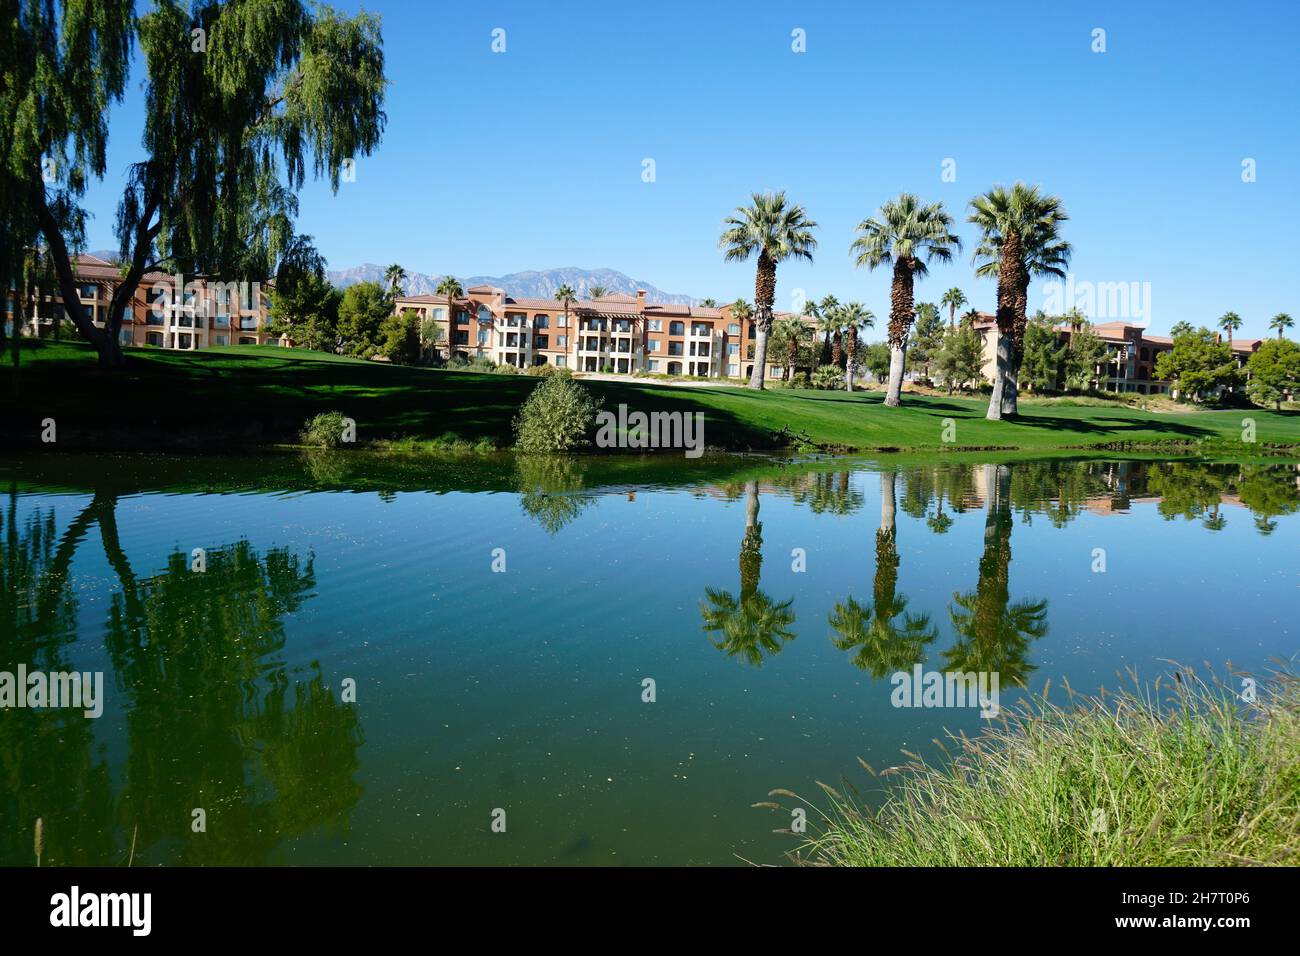 Pond and Condos next to a Golf Course Stock Photo